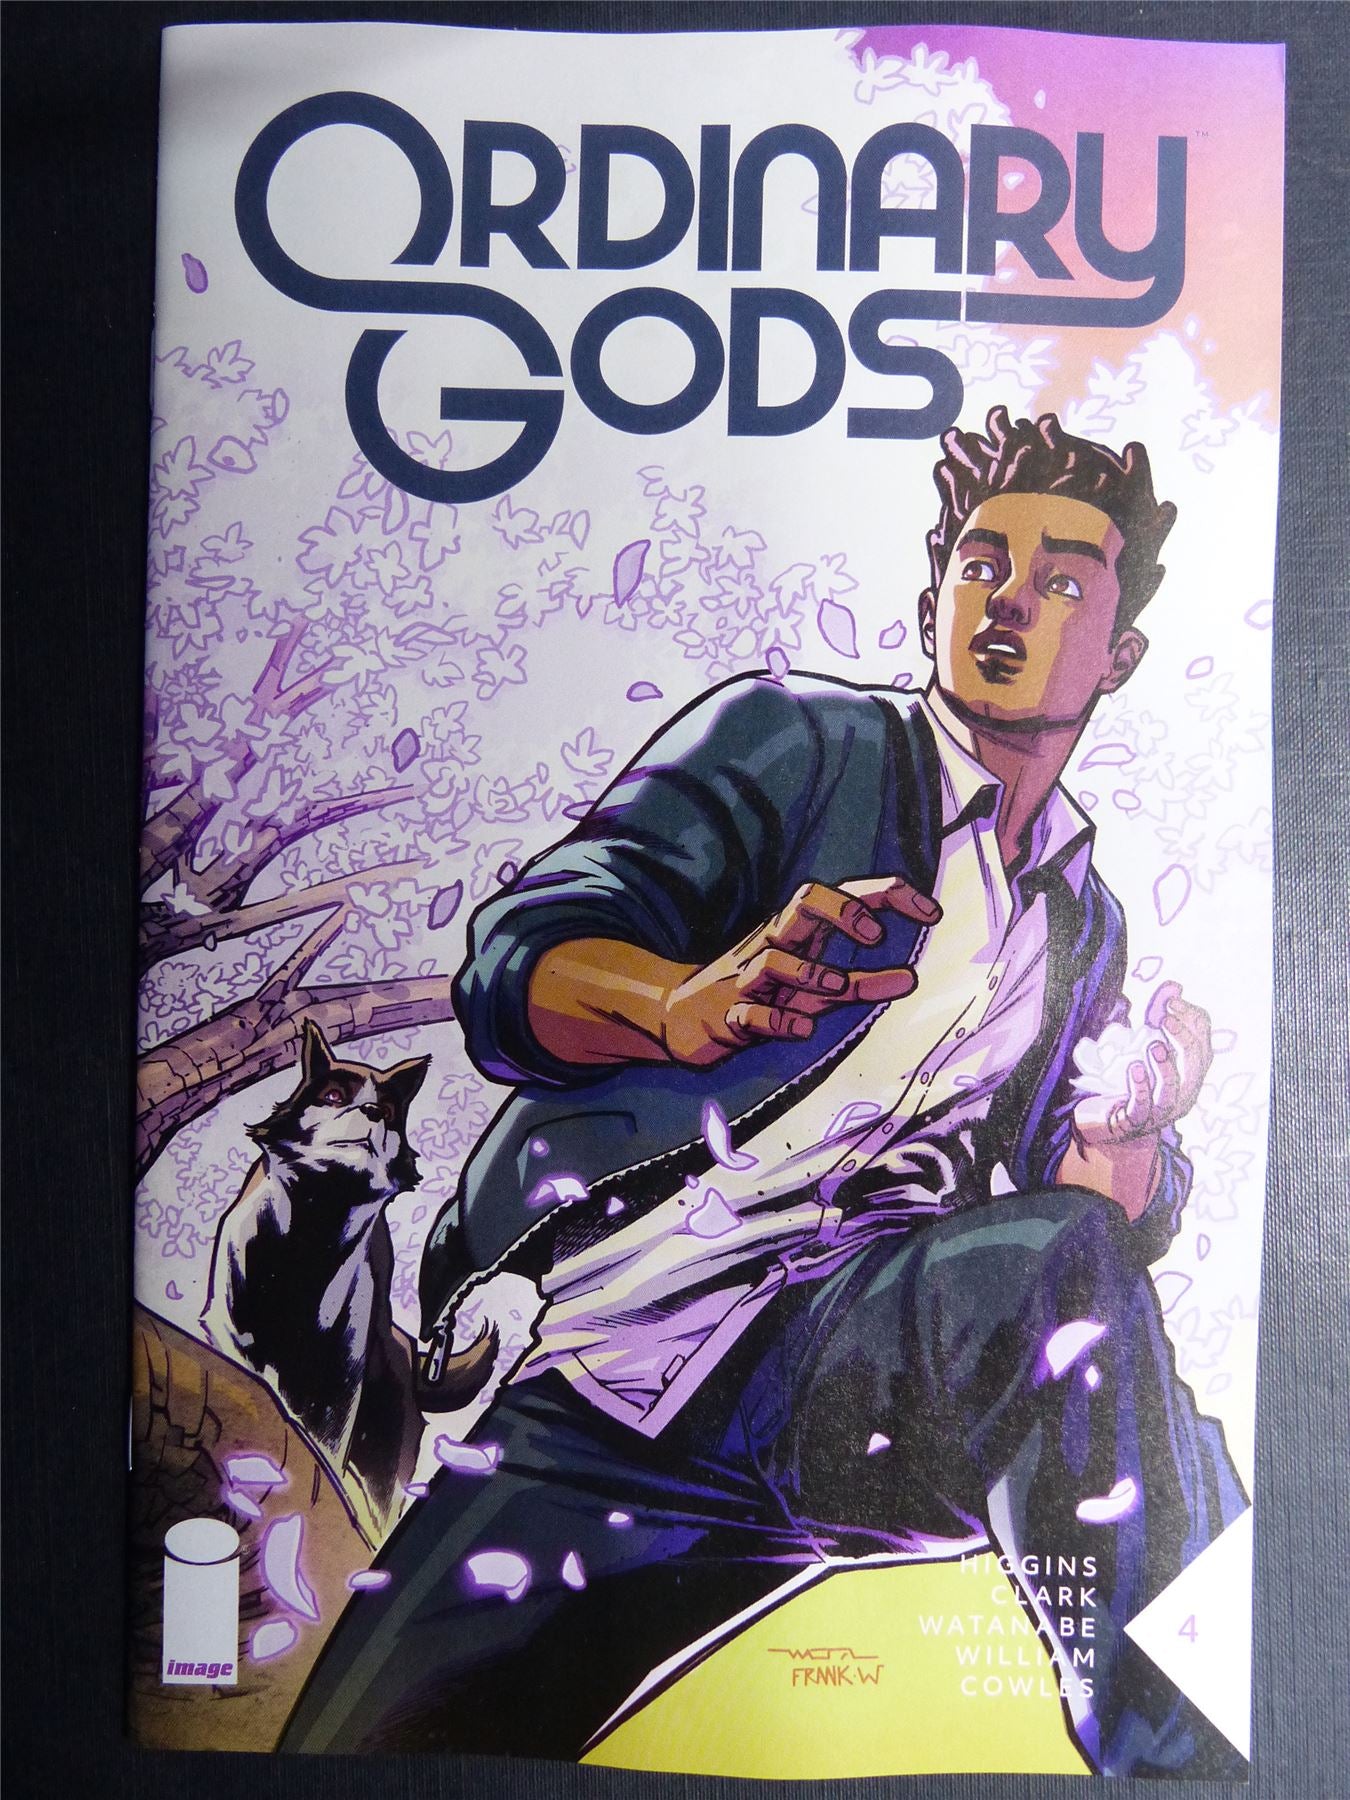 ORDINARY Gods #4 - Oct 2021 - Image Comics #NA